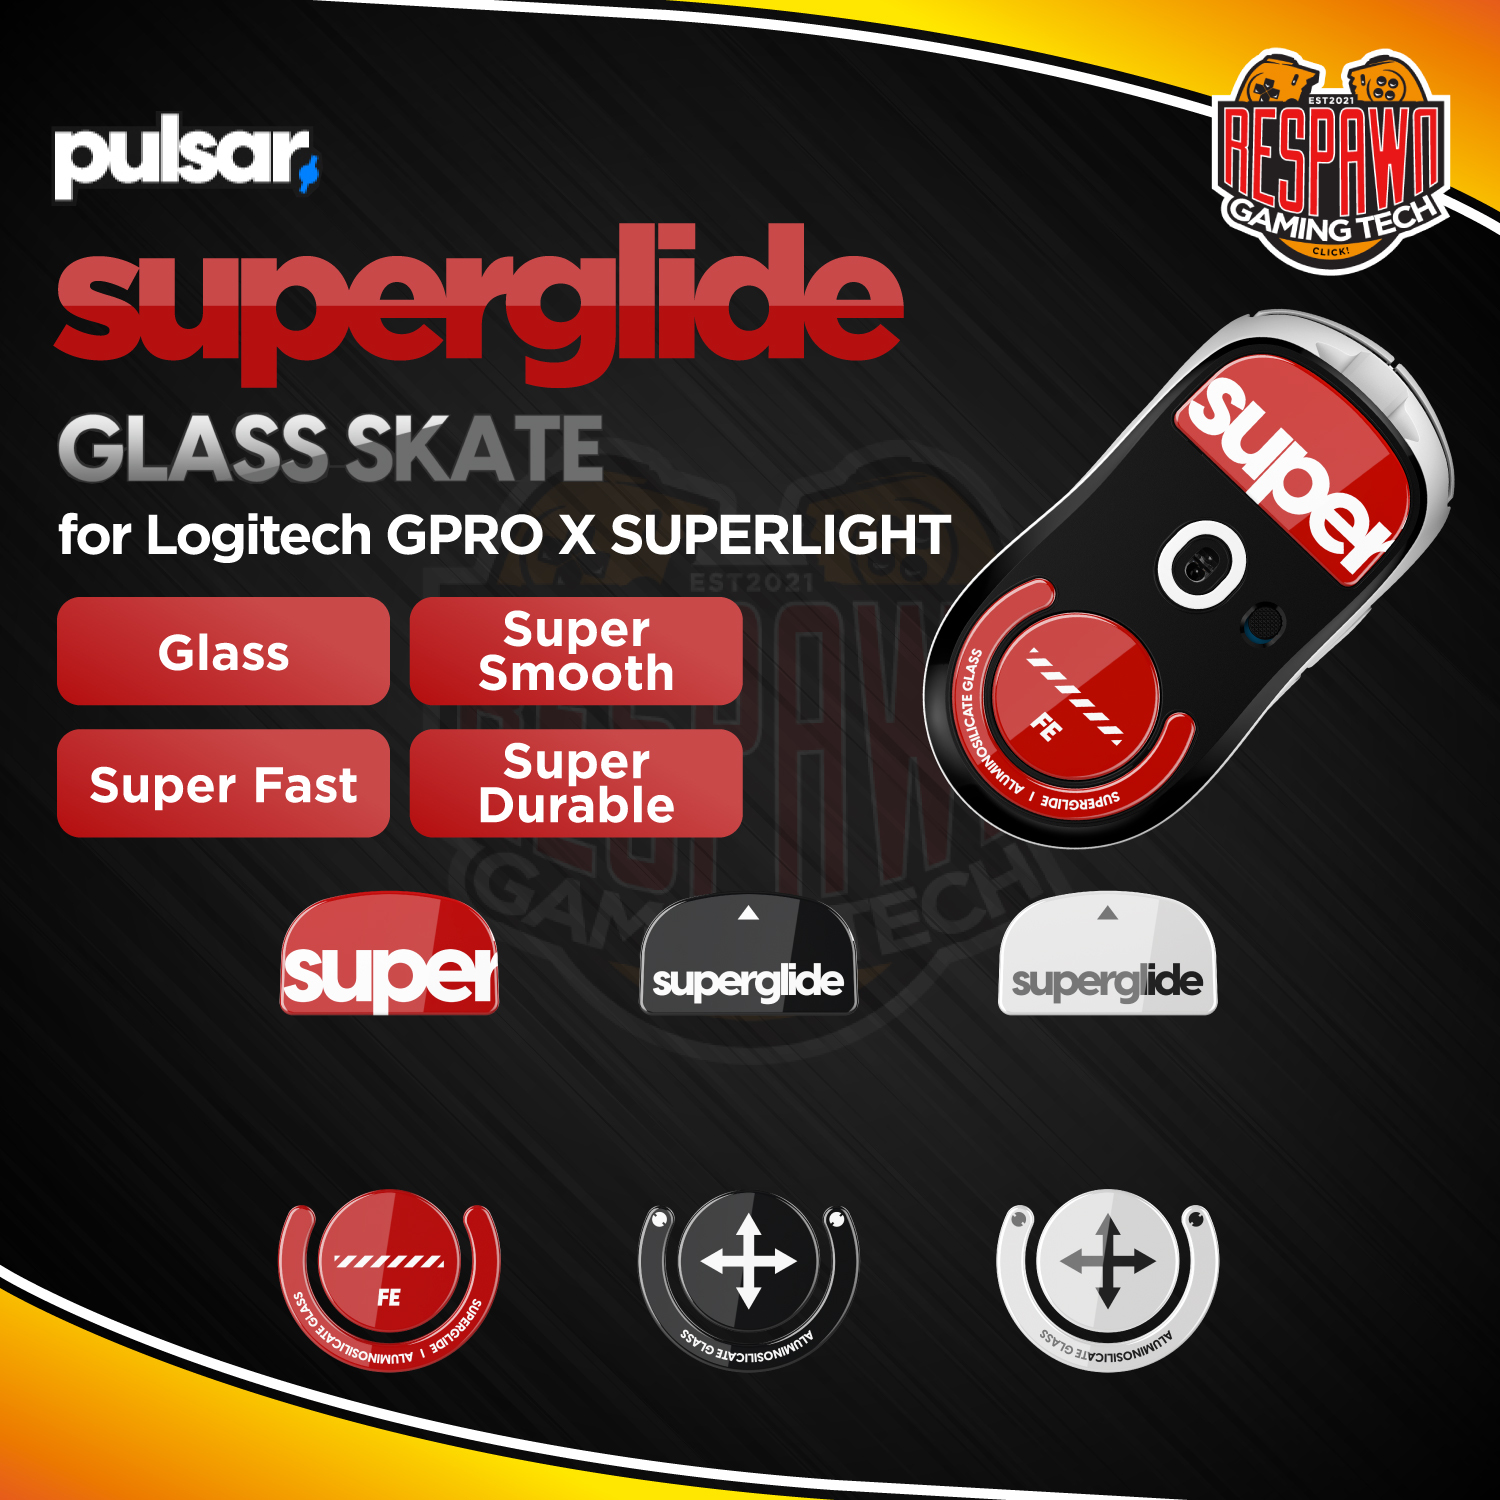 Pulsar Superglide Glass Skates For Logitech G Pro X Superlight – Respawn  Gaming Tech